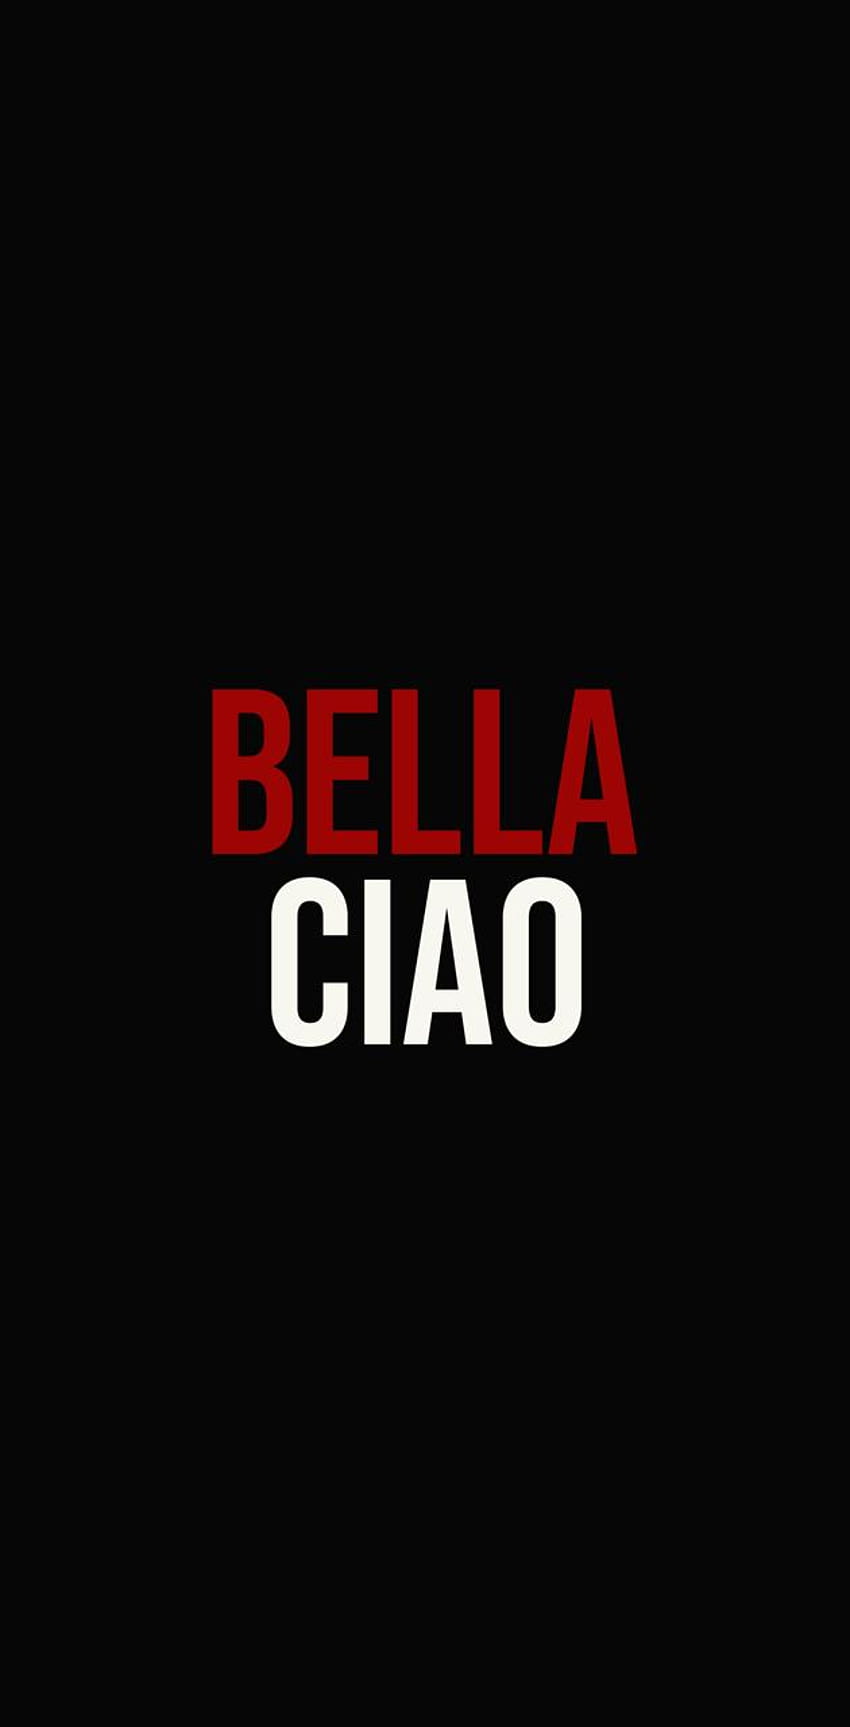 1366x768px, 720P Free download | Bella Ciao , Money Heist Bella Ciao HD ...